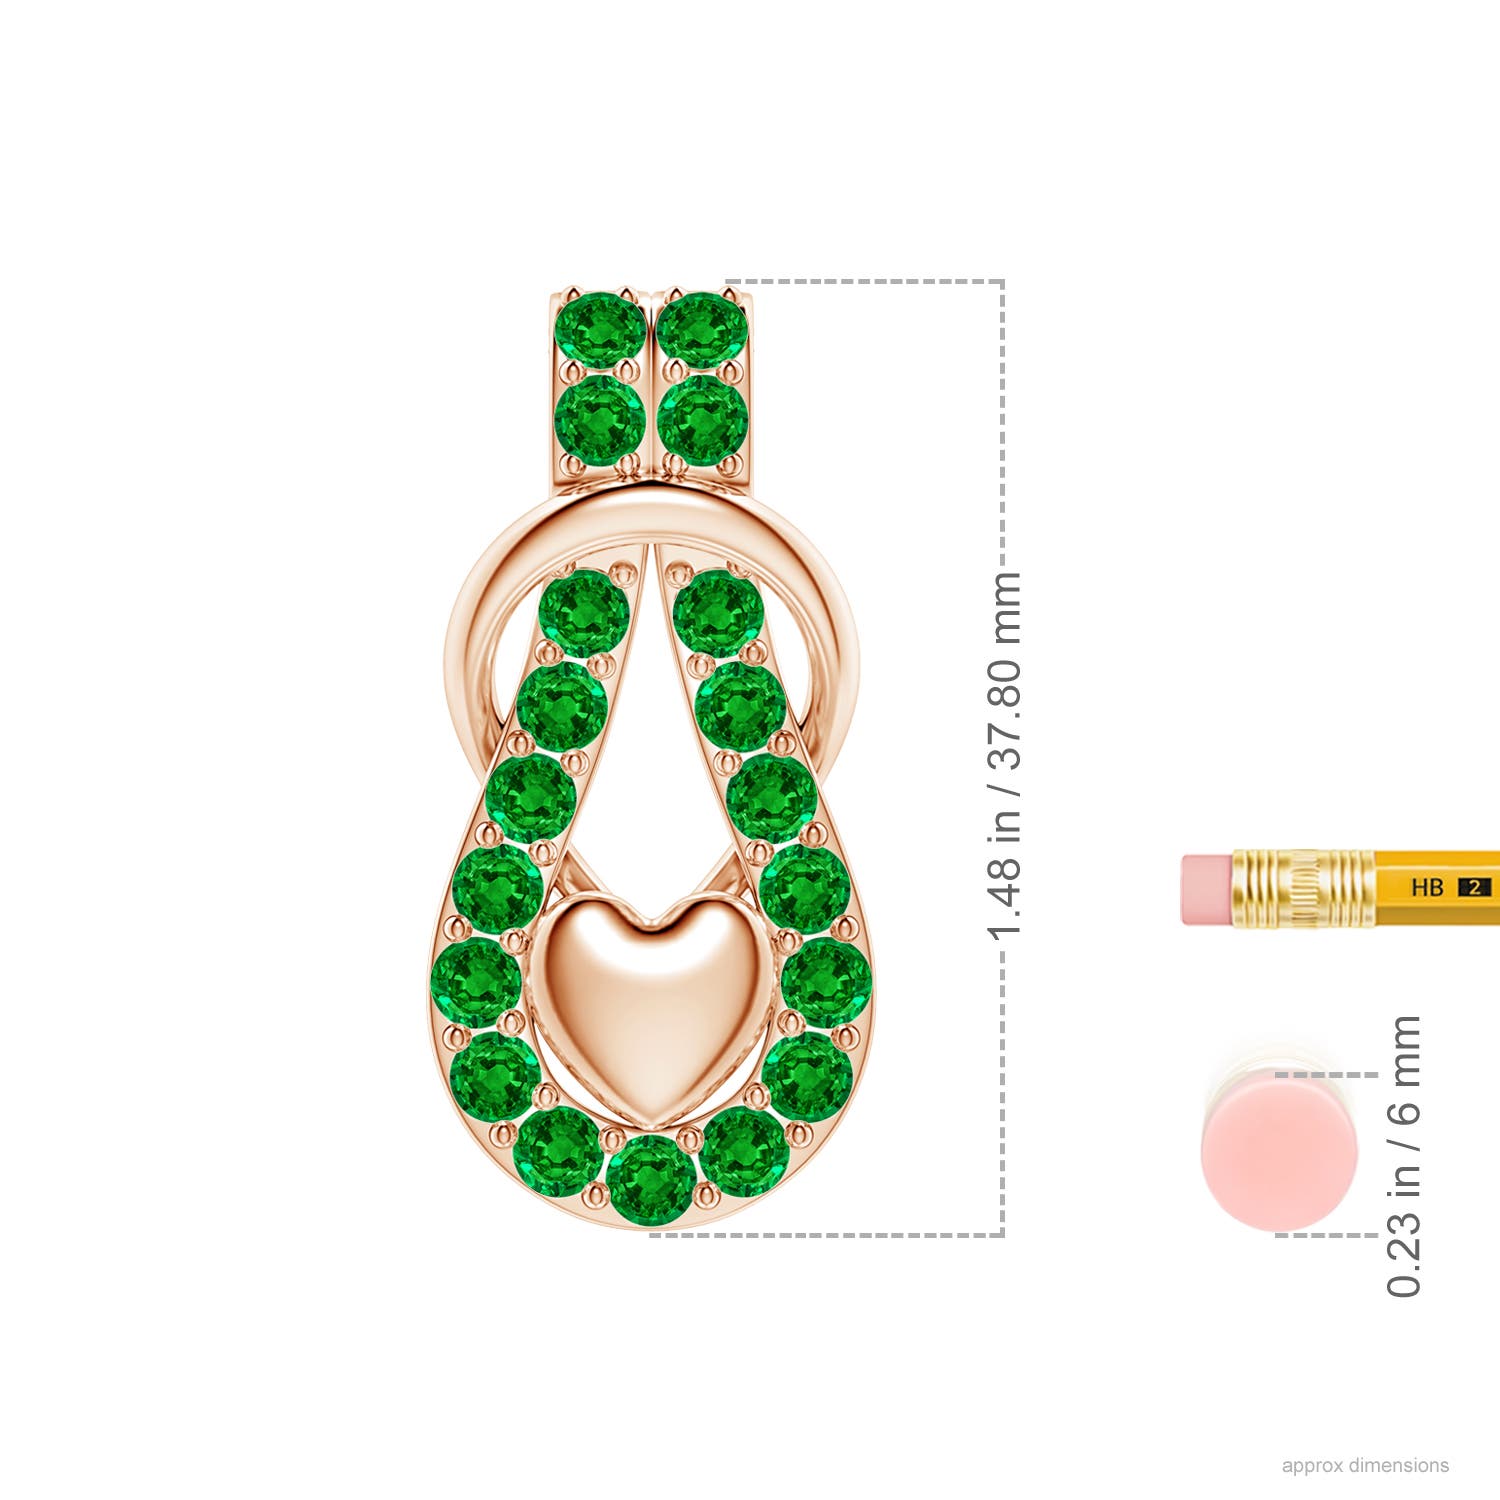 AAAA - Emerald / 2.85 CT / 18 KT Rose Gold